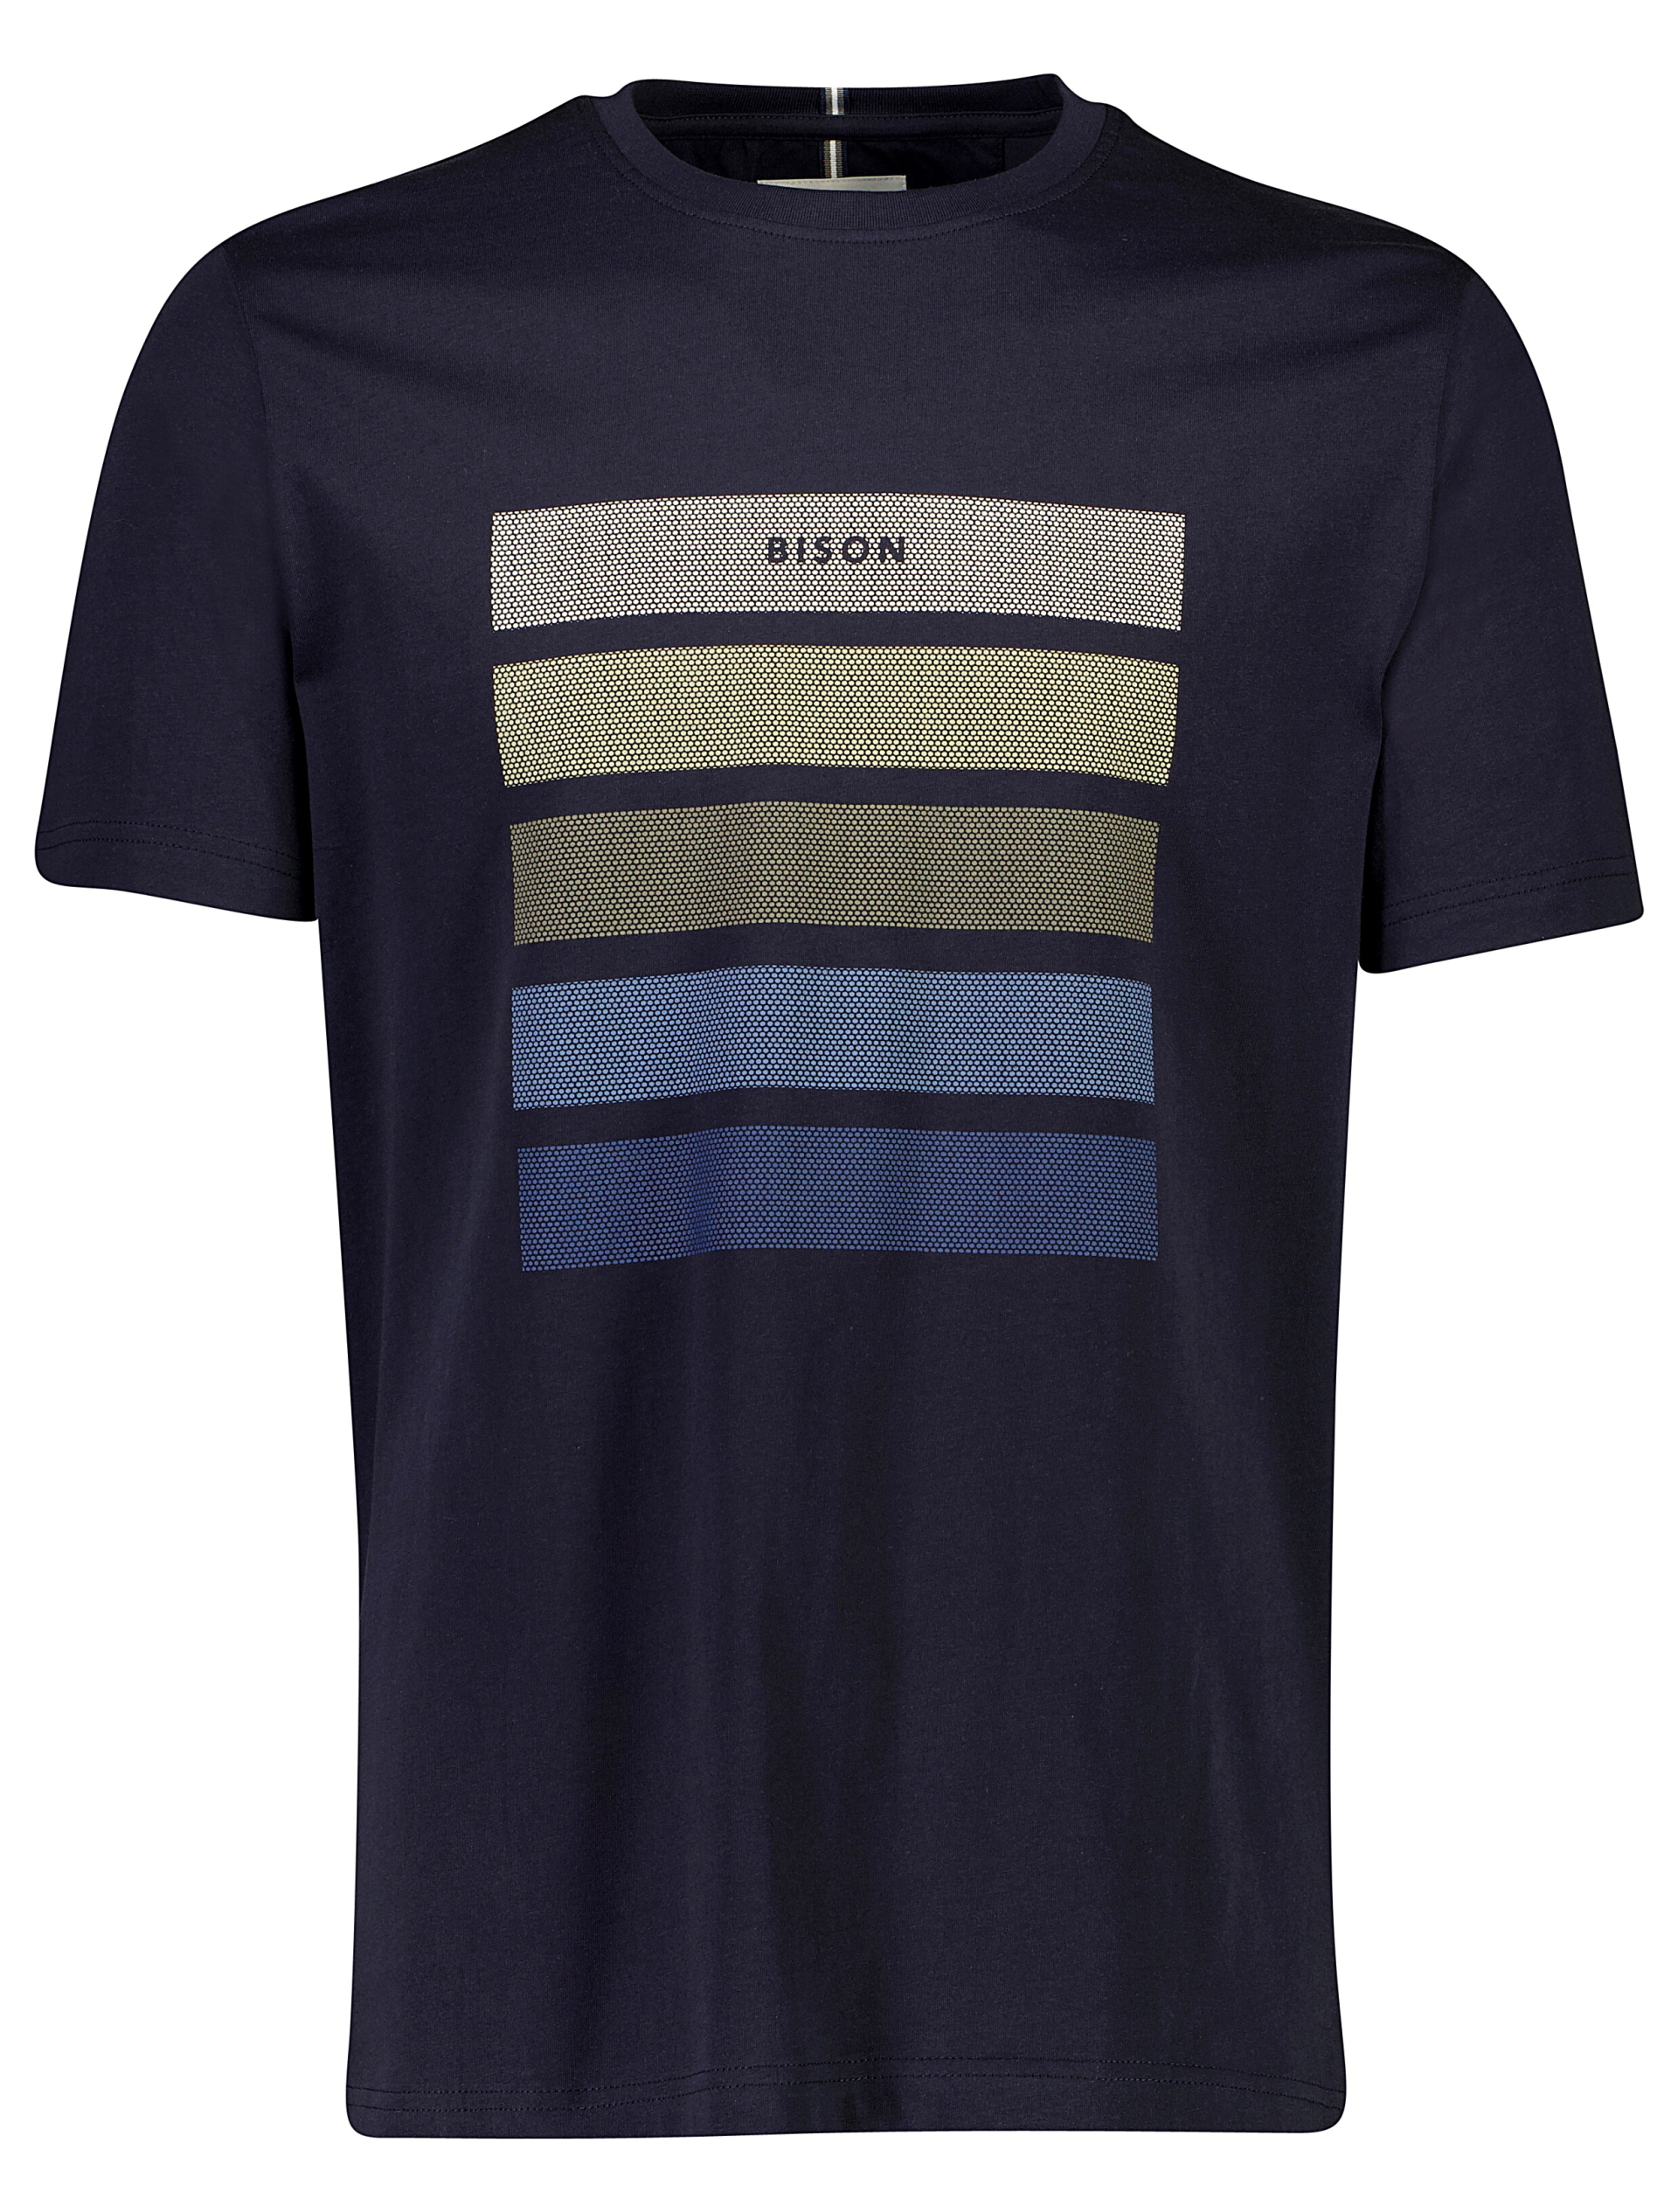 Bison T-shirt blå / dk navy